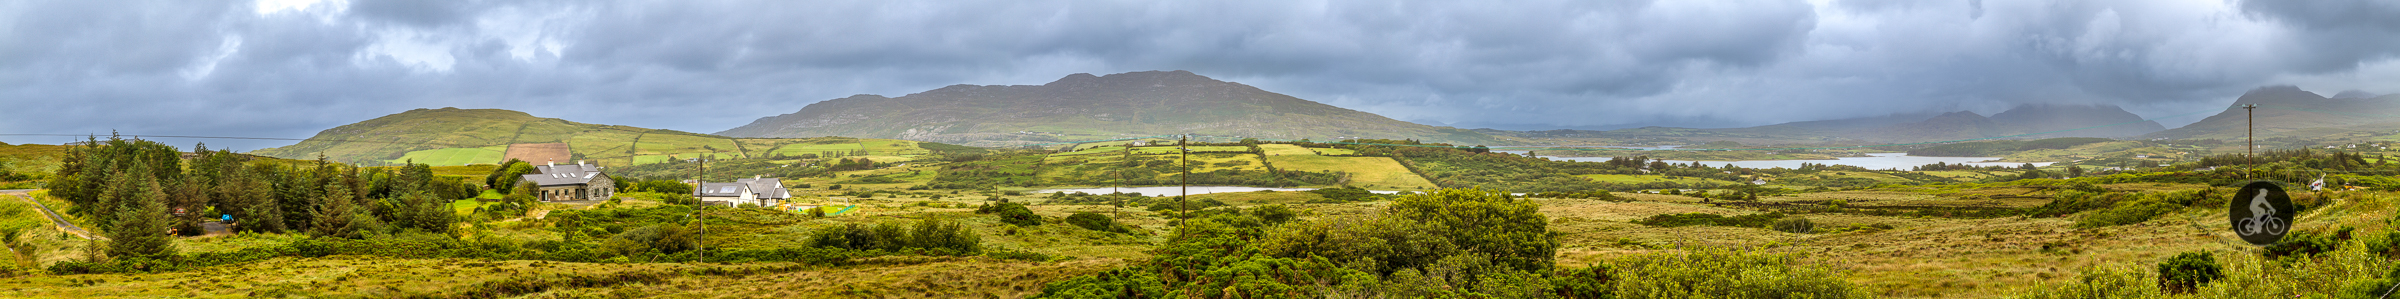 Mweelrea mountain - County Mayo - behind Garranbough Lough - County Galway - pano